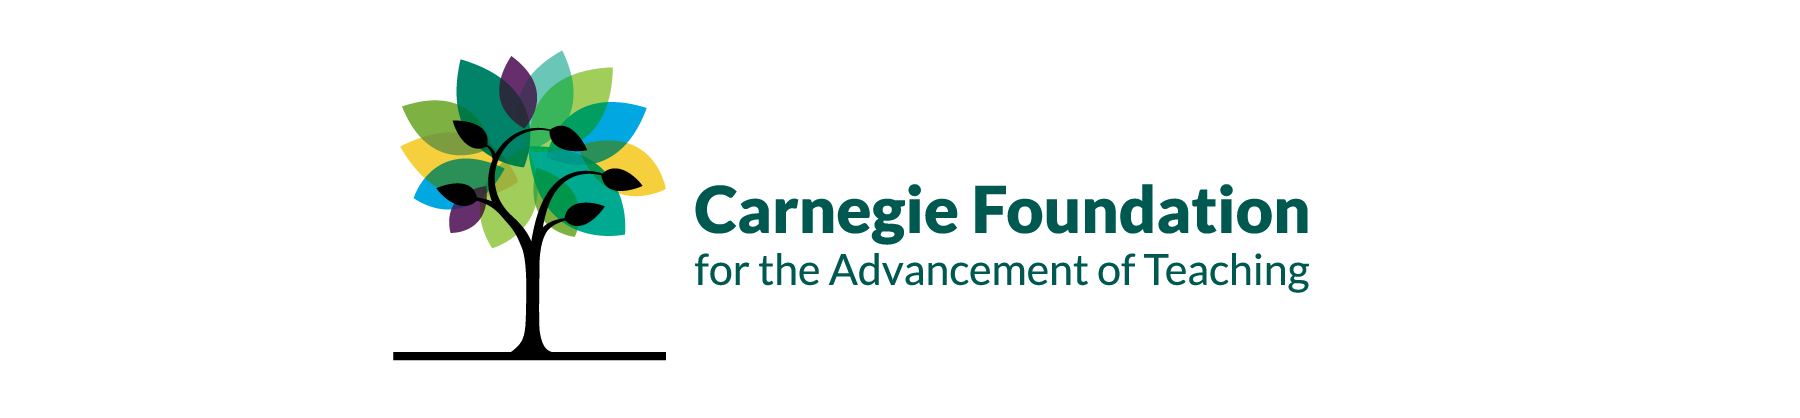 Carnegie Foundation Brand Design